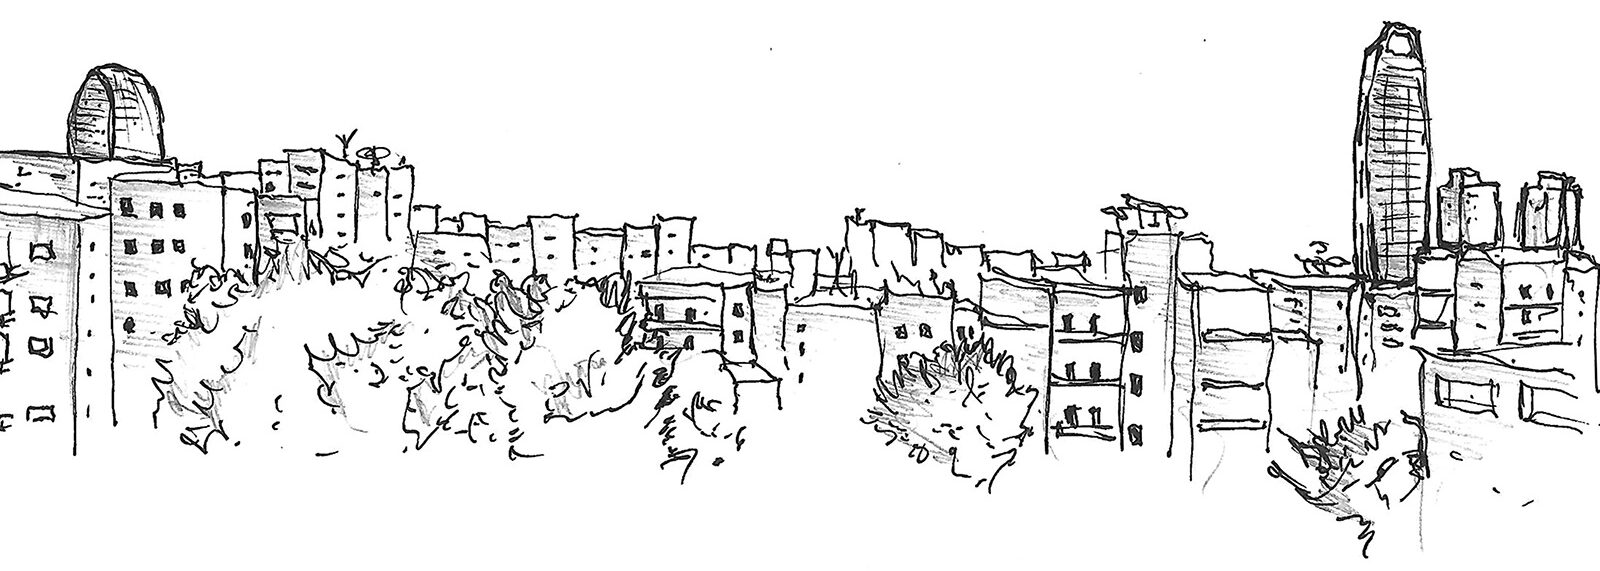 Archisearch Οι αστικές αναπλάσεις στη σύγχρονη πολεοδομική πρακτική: Το παράκτιο μέτωπο της Λεμεσού | Ερευνητική εργασία από το Γιάννο Παυλίδη και την Ειρήνη Κωνσταντίνου